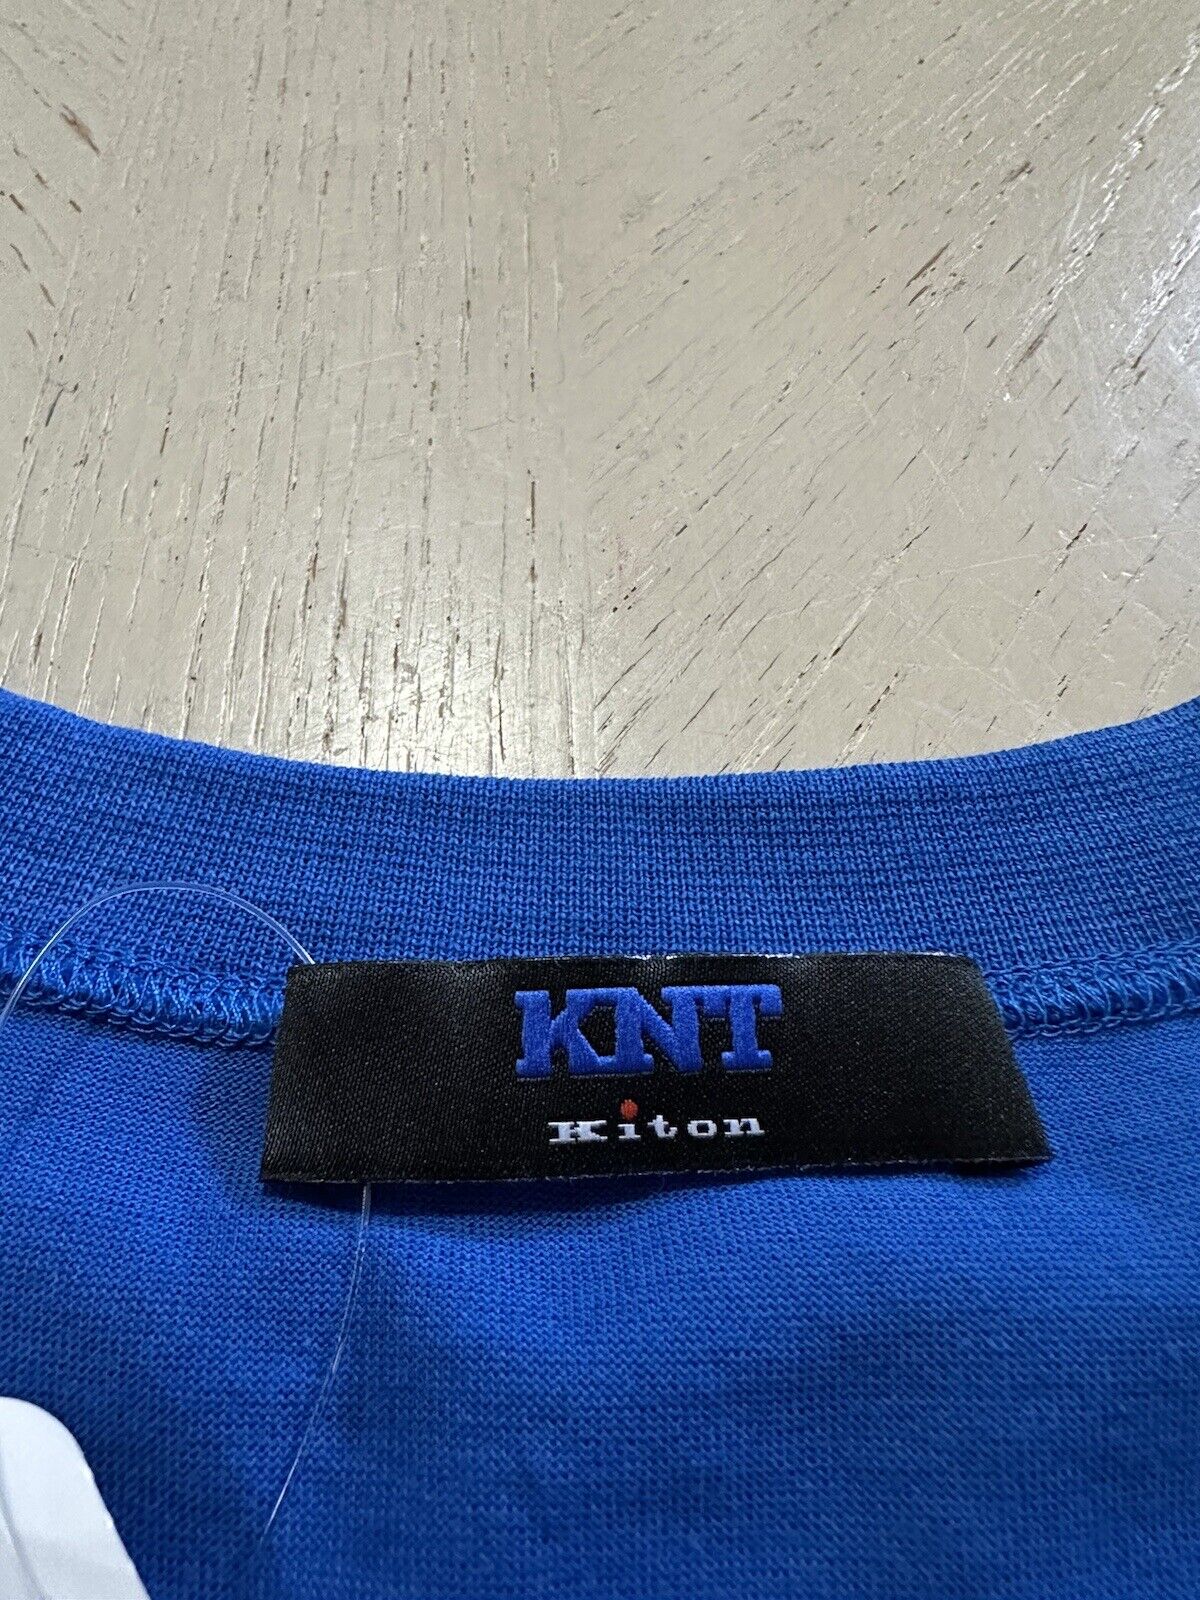 New Kiton Men’s Short Sleeve Pocket Crewneck T Shirt Blue Size L Italy